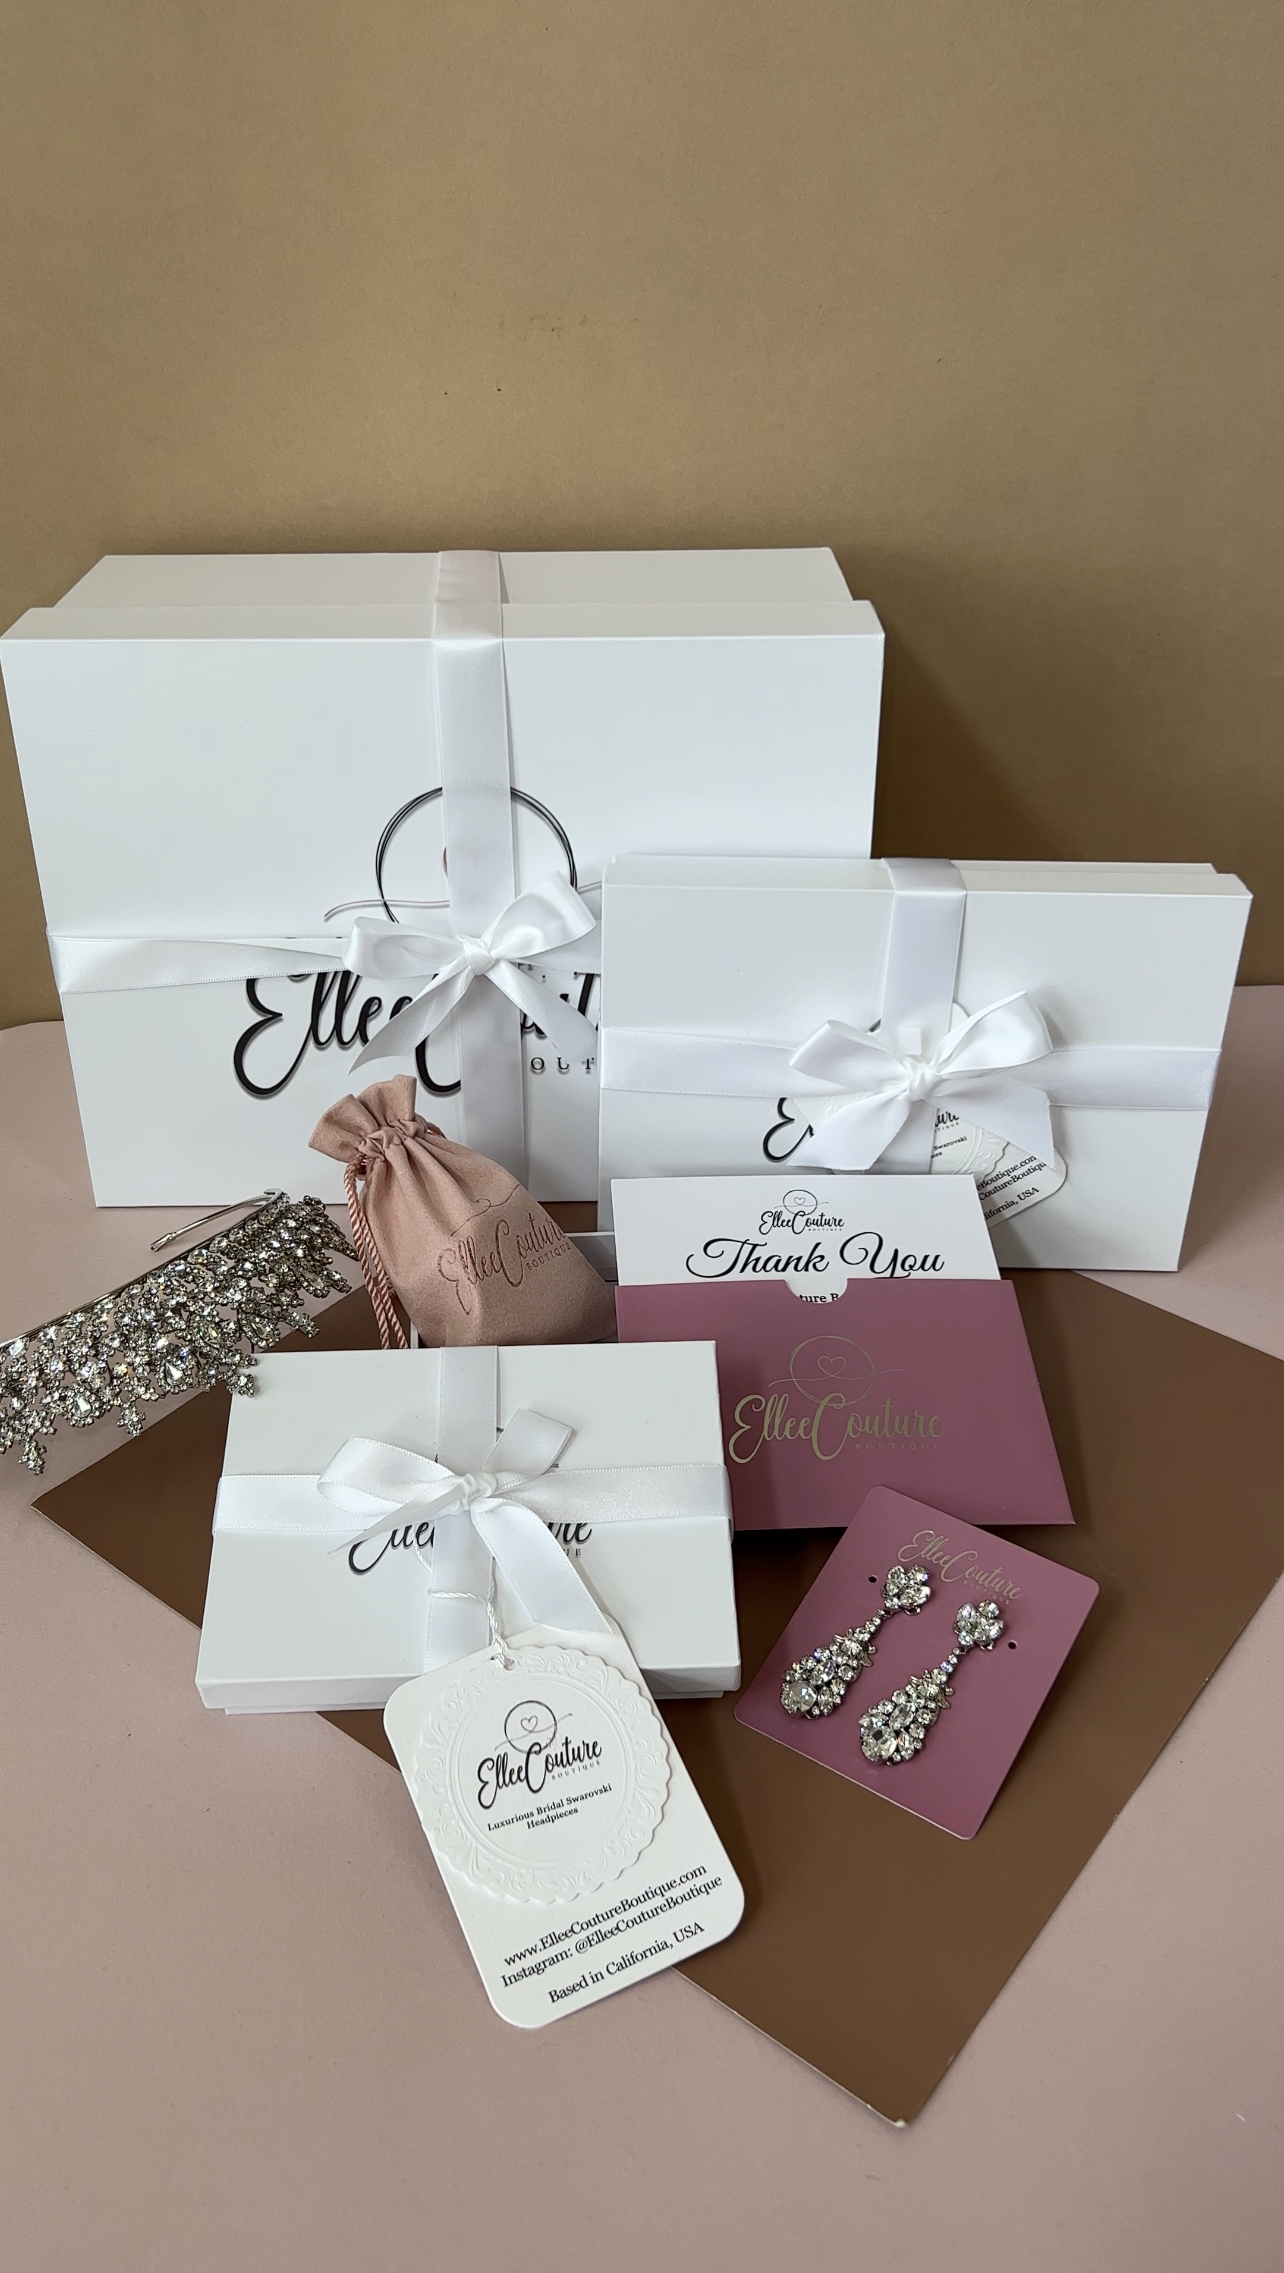 GEMNA Rose Gold Swarovski Luxurious Wedding Tiara 3D Luxury